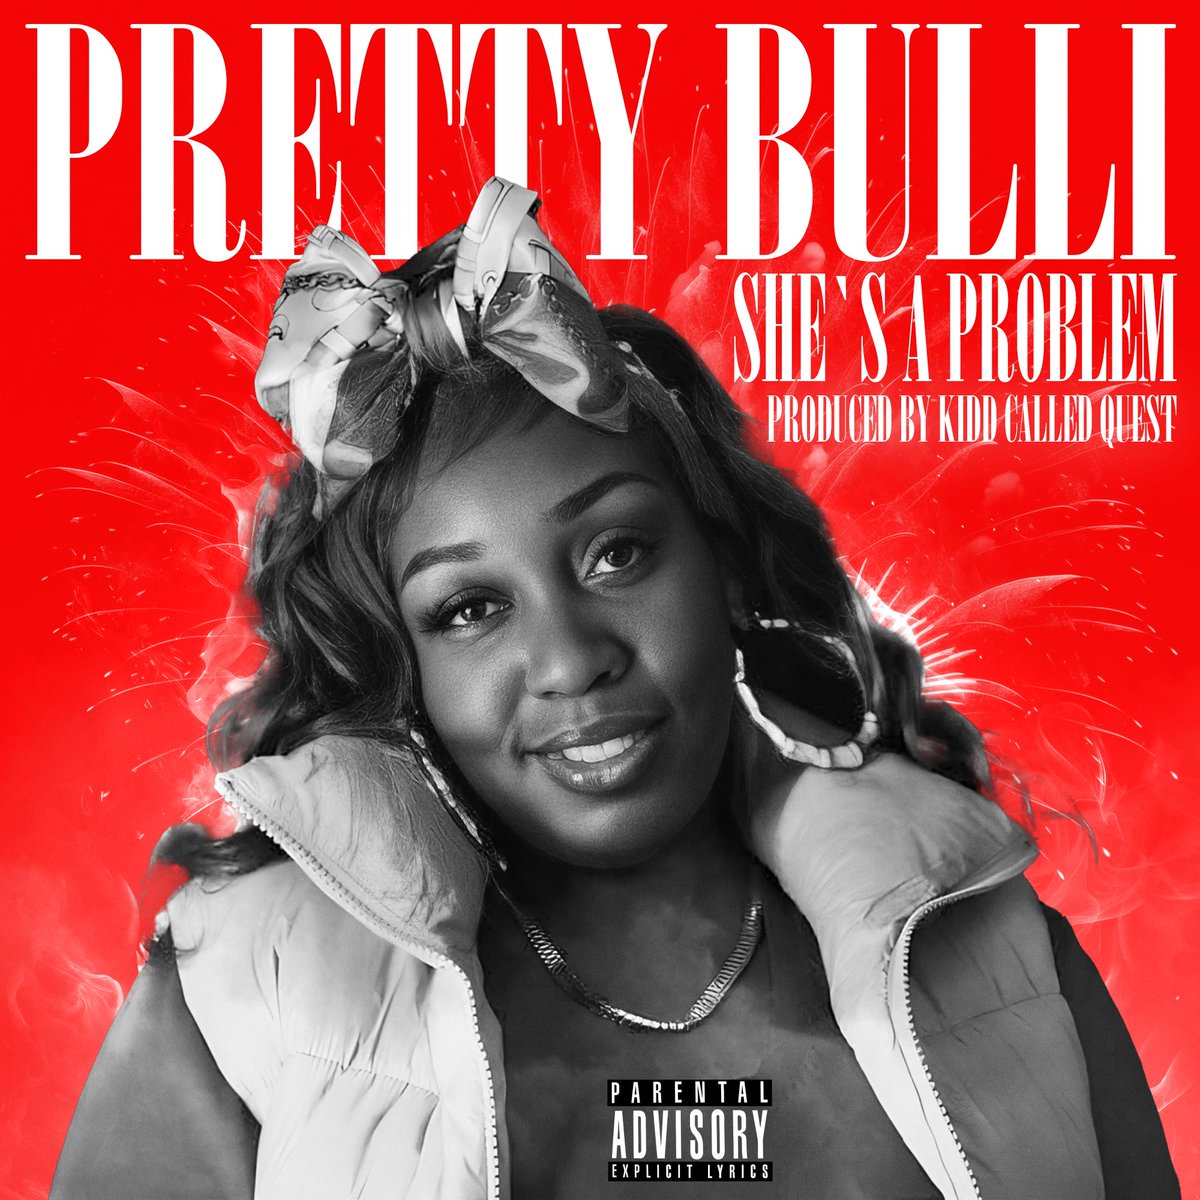 Now playing : @PrettyBulli ' She's A Problem ' @KIDDCALLEDQUEST in rotation on @1009WXIR @sftu585radio mixcloud.com/christopher-gr…